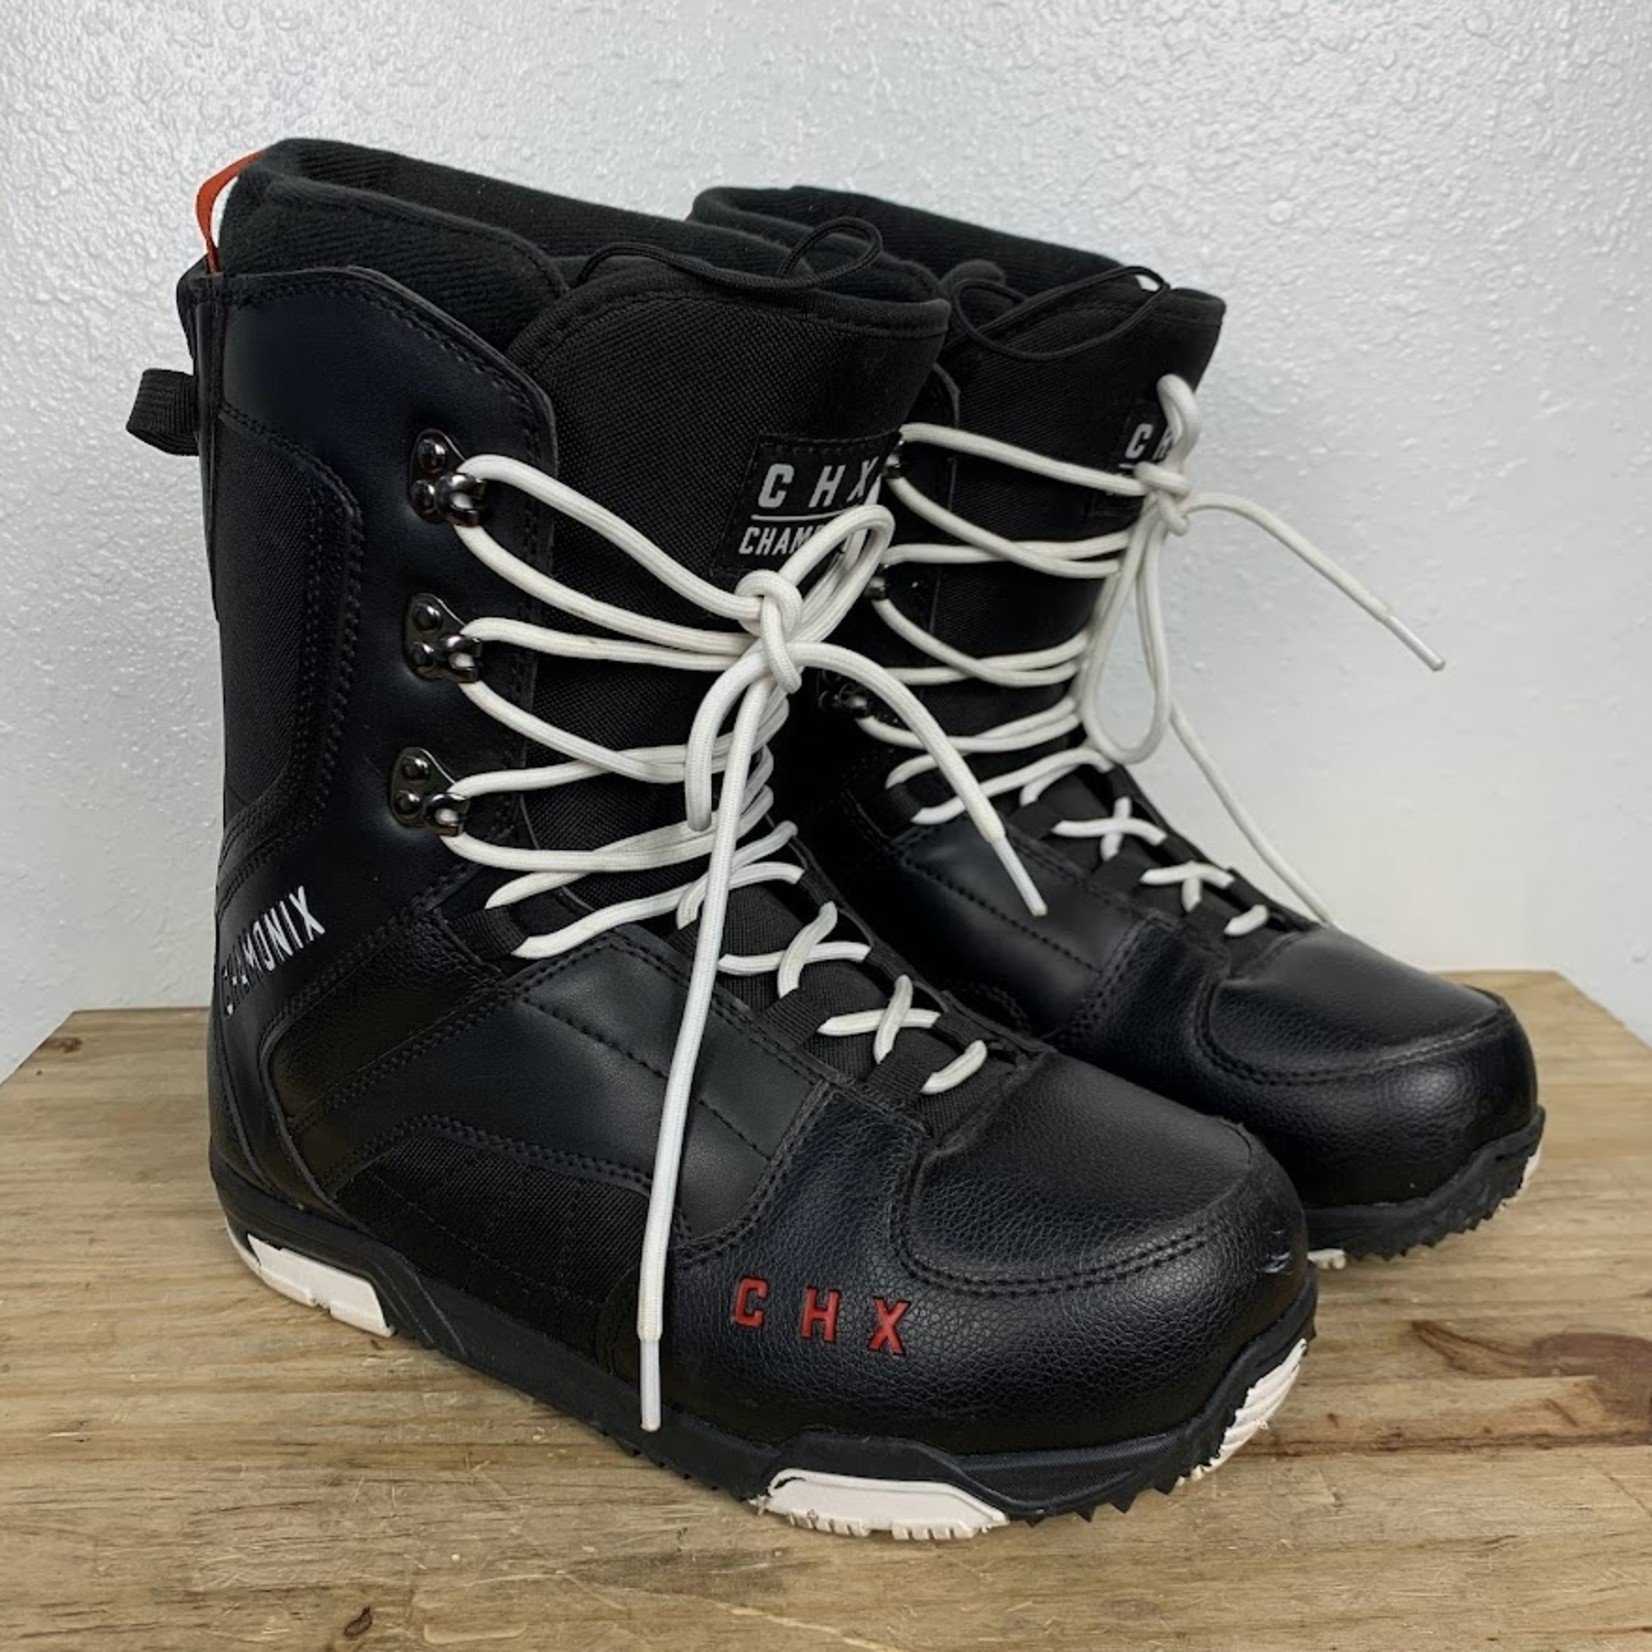 Chamonix Snowboard Boots, Size 10 MENS